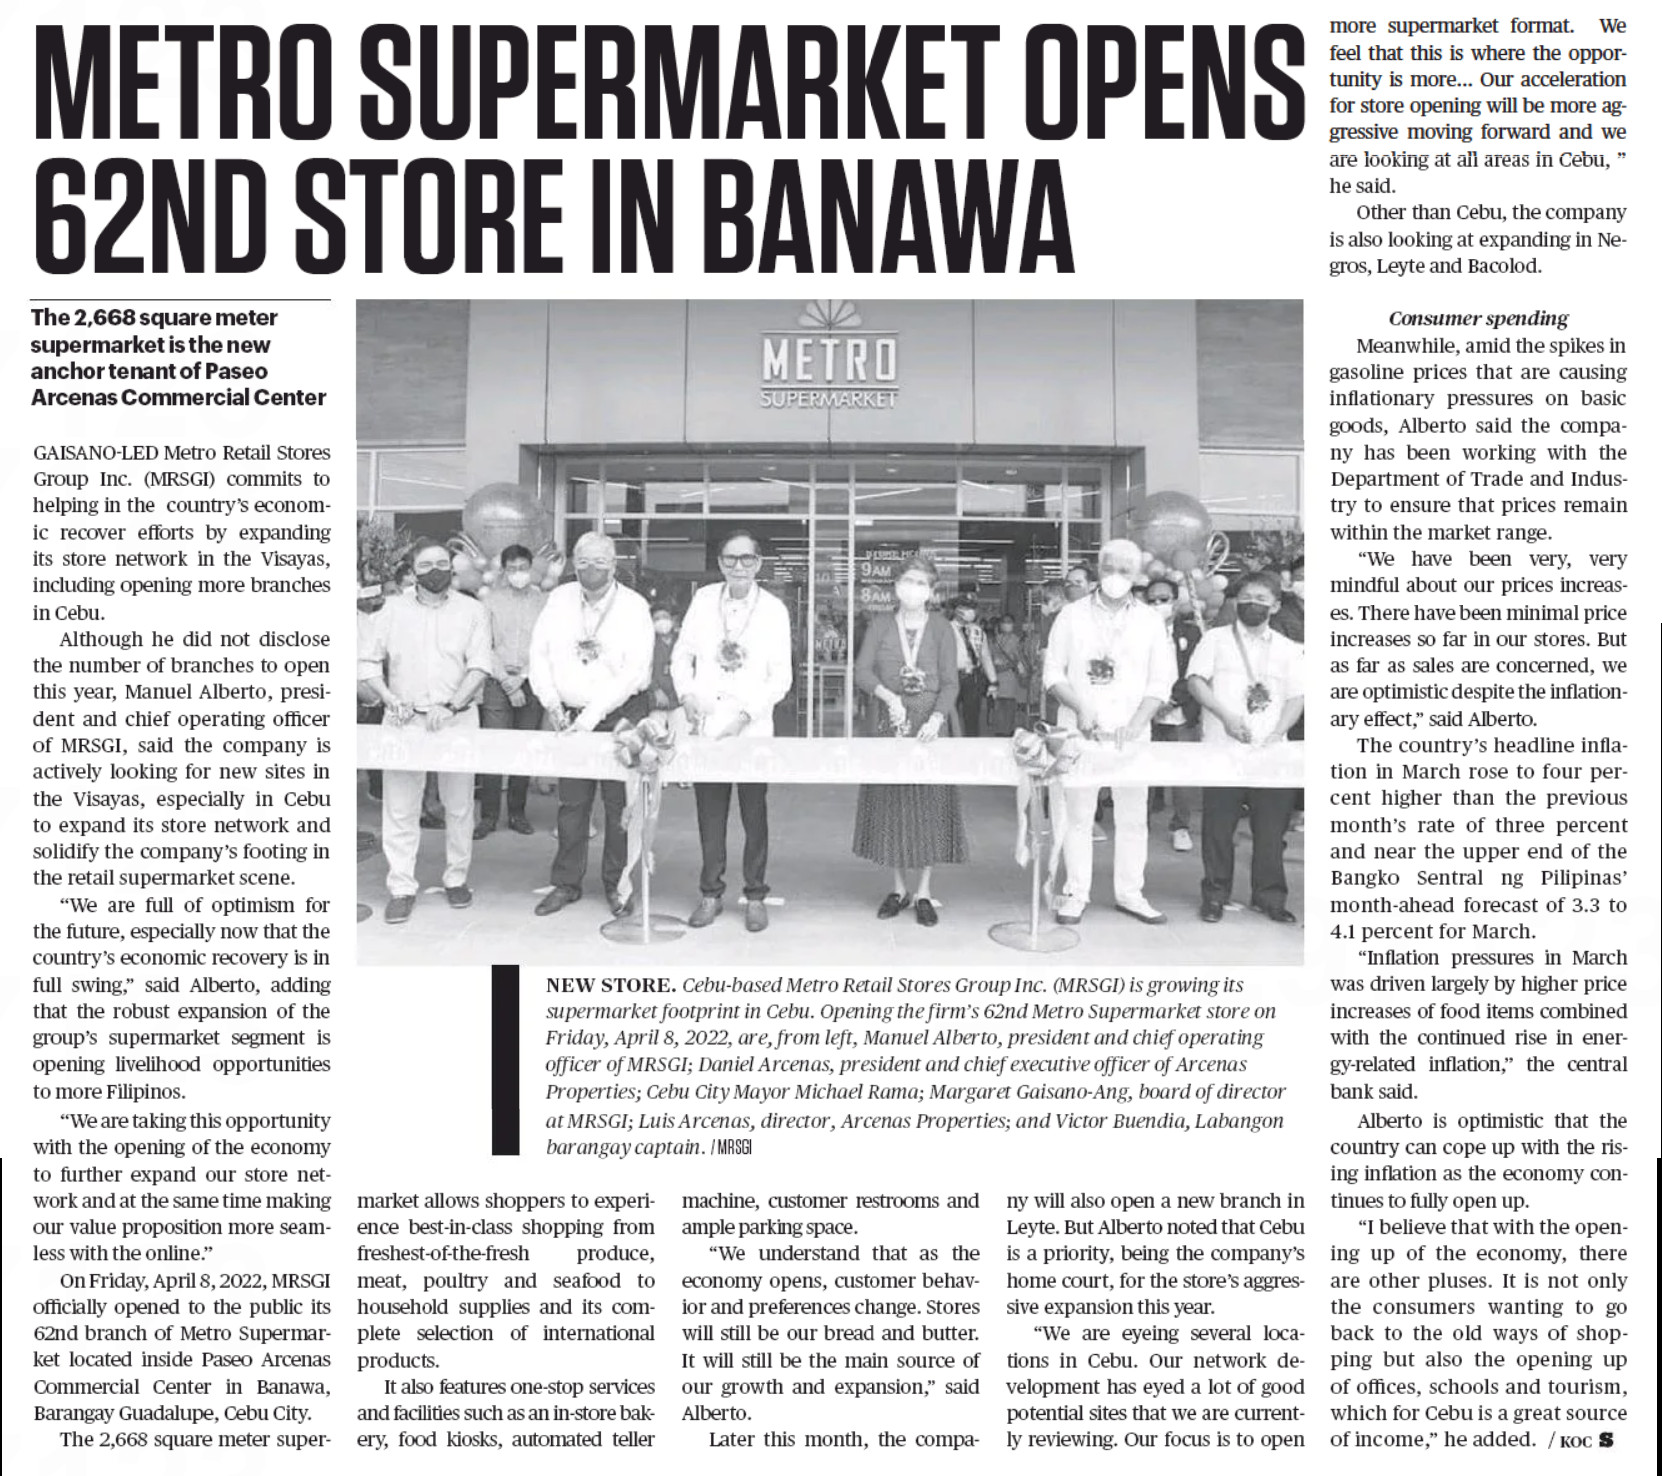 Metro Supermarket opens 62nd store in Banawa SunStar Cebu